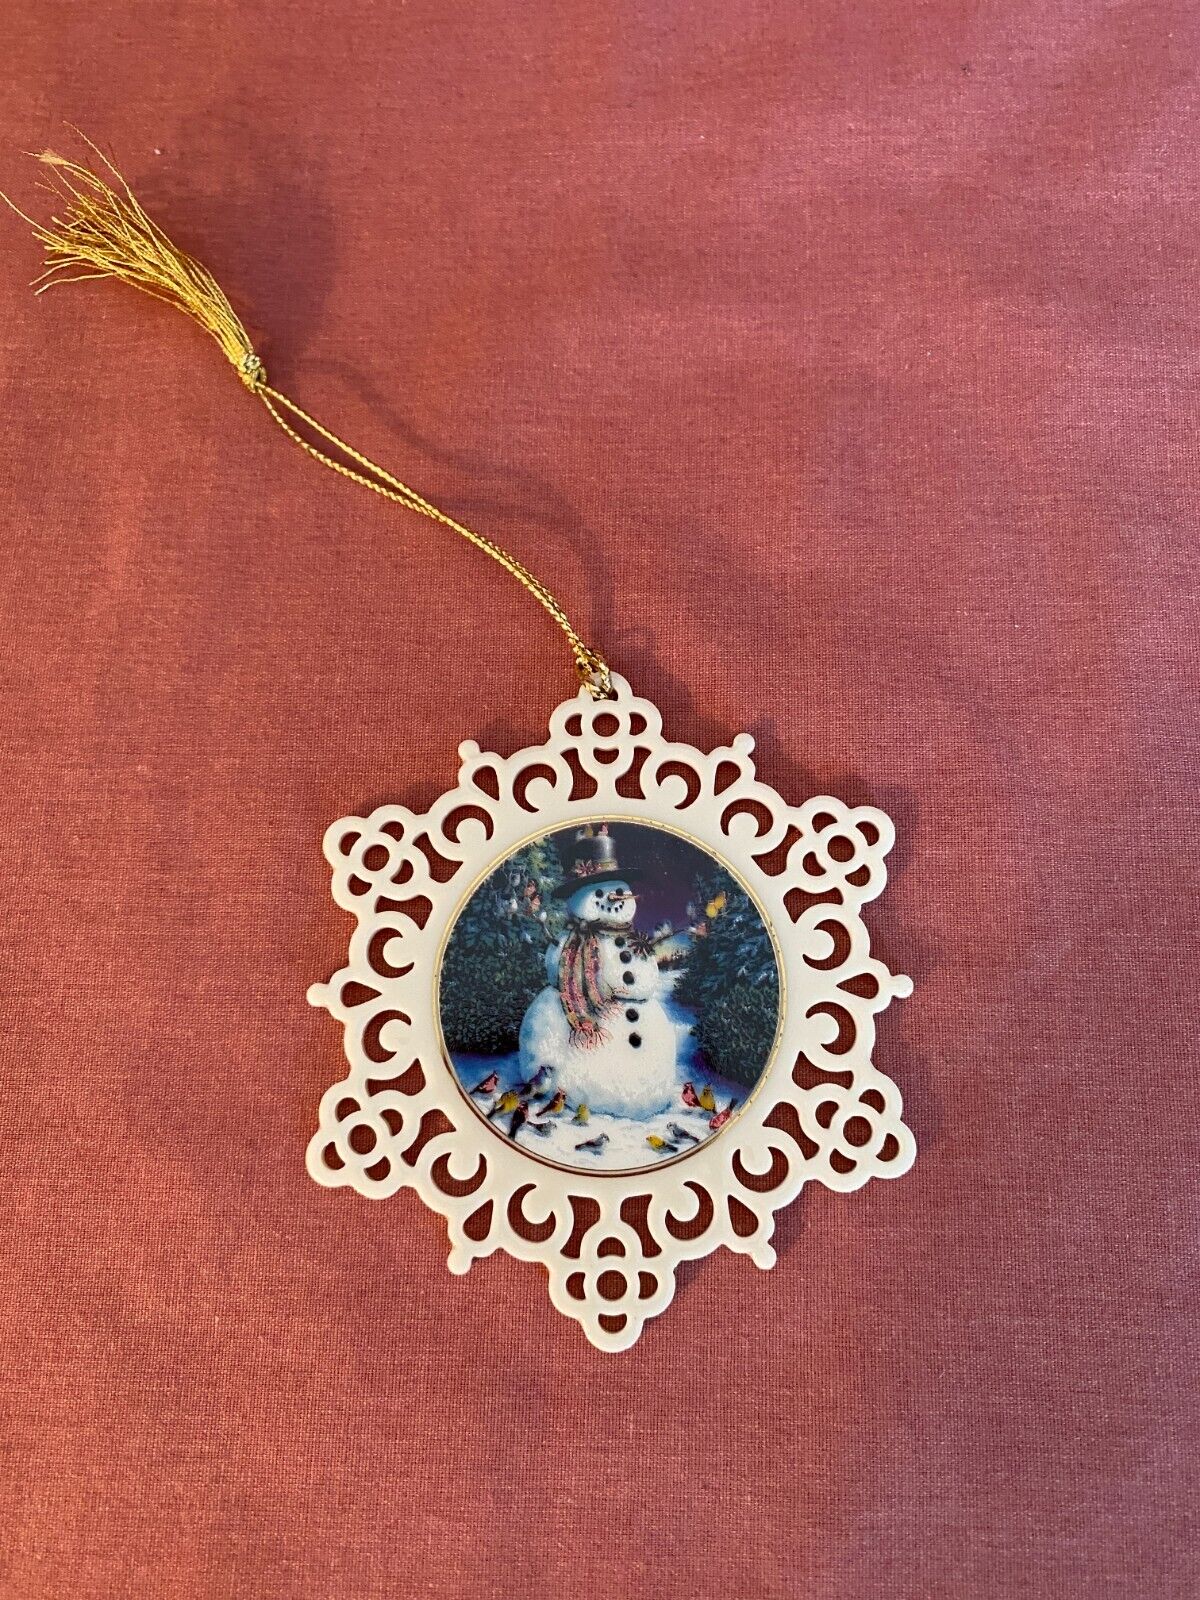 Lenox Snowflake Christmas Pierced Porcelain Ornament with Snowman and Birds